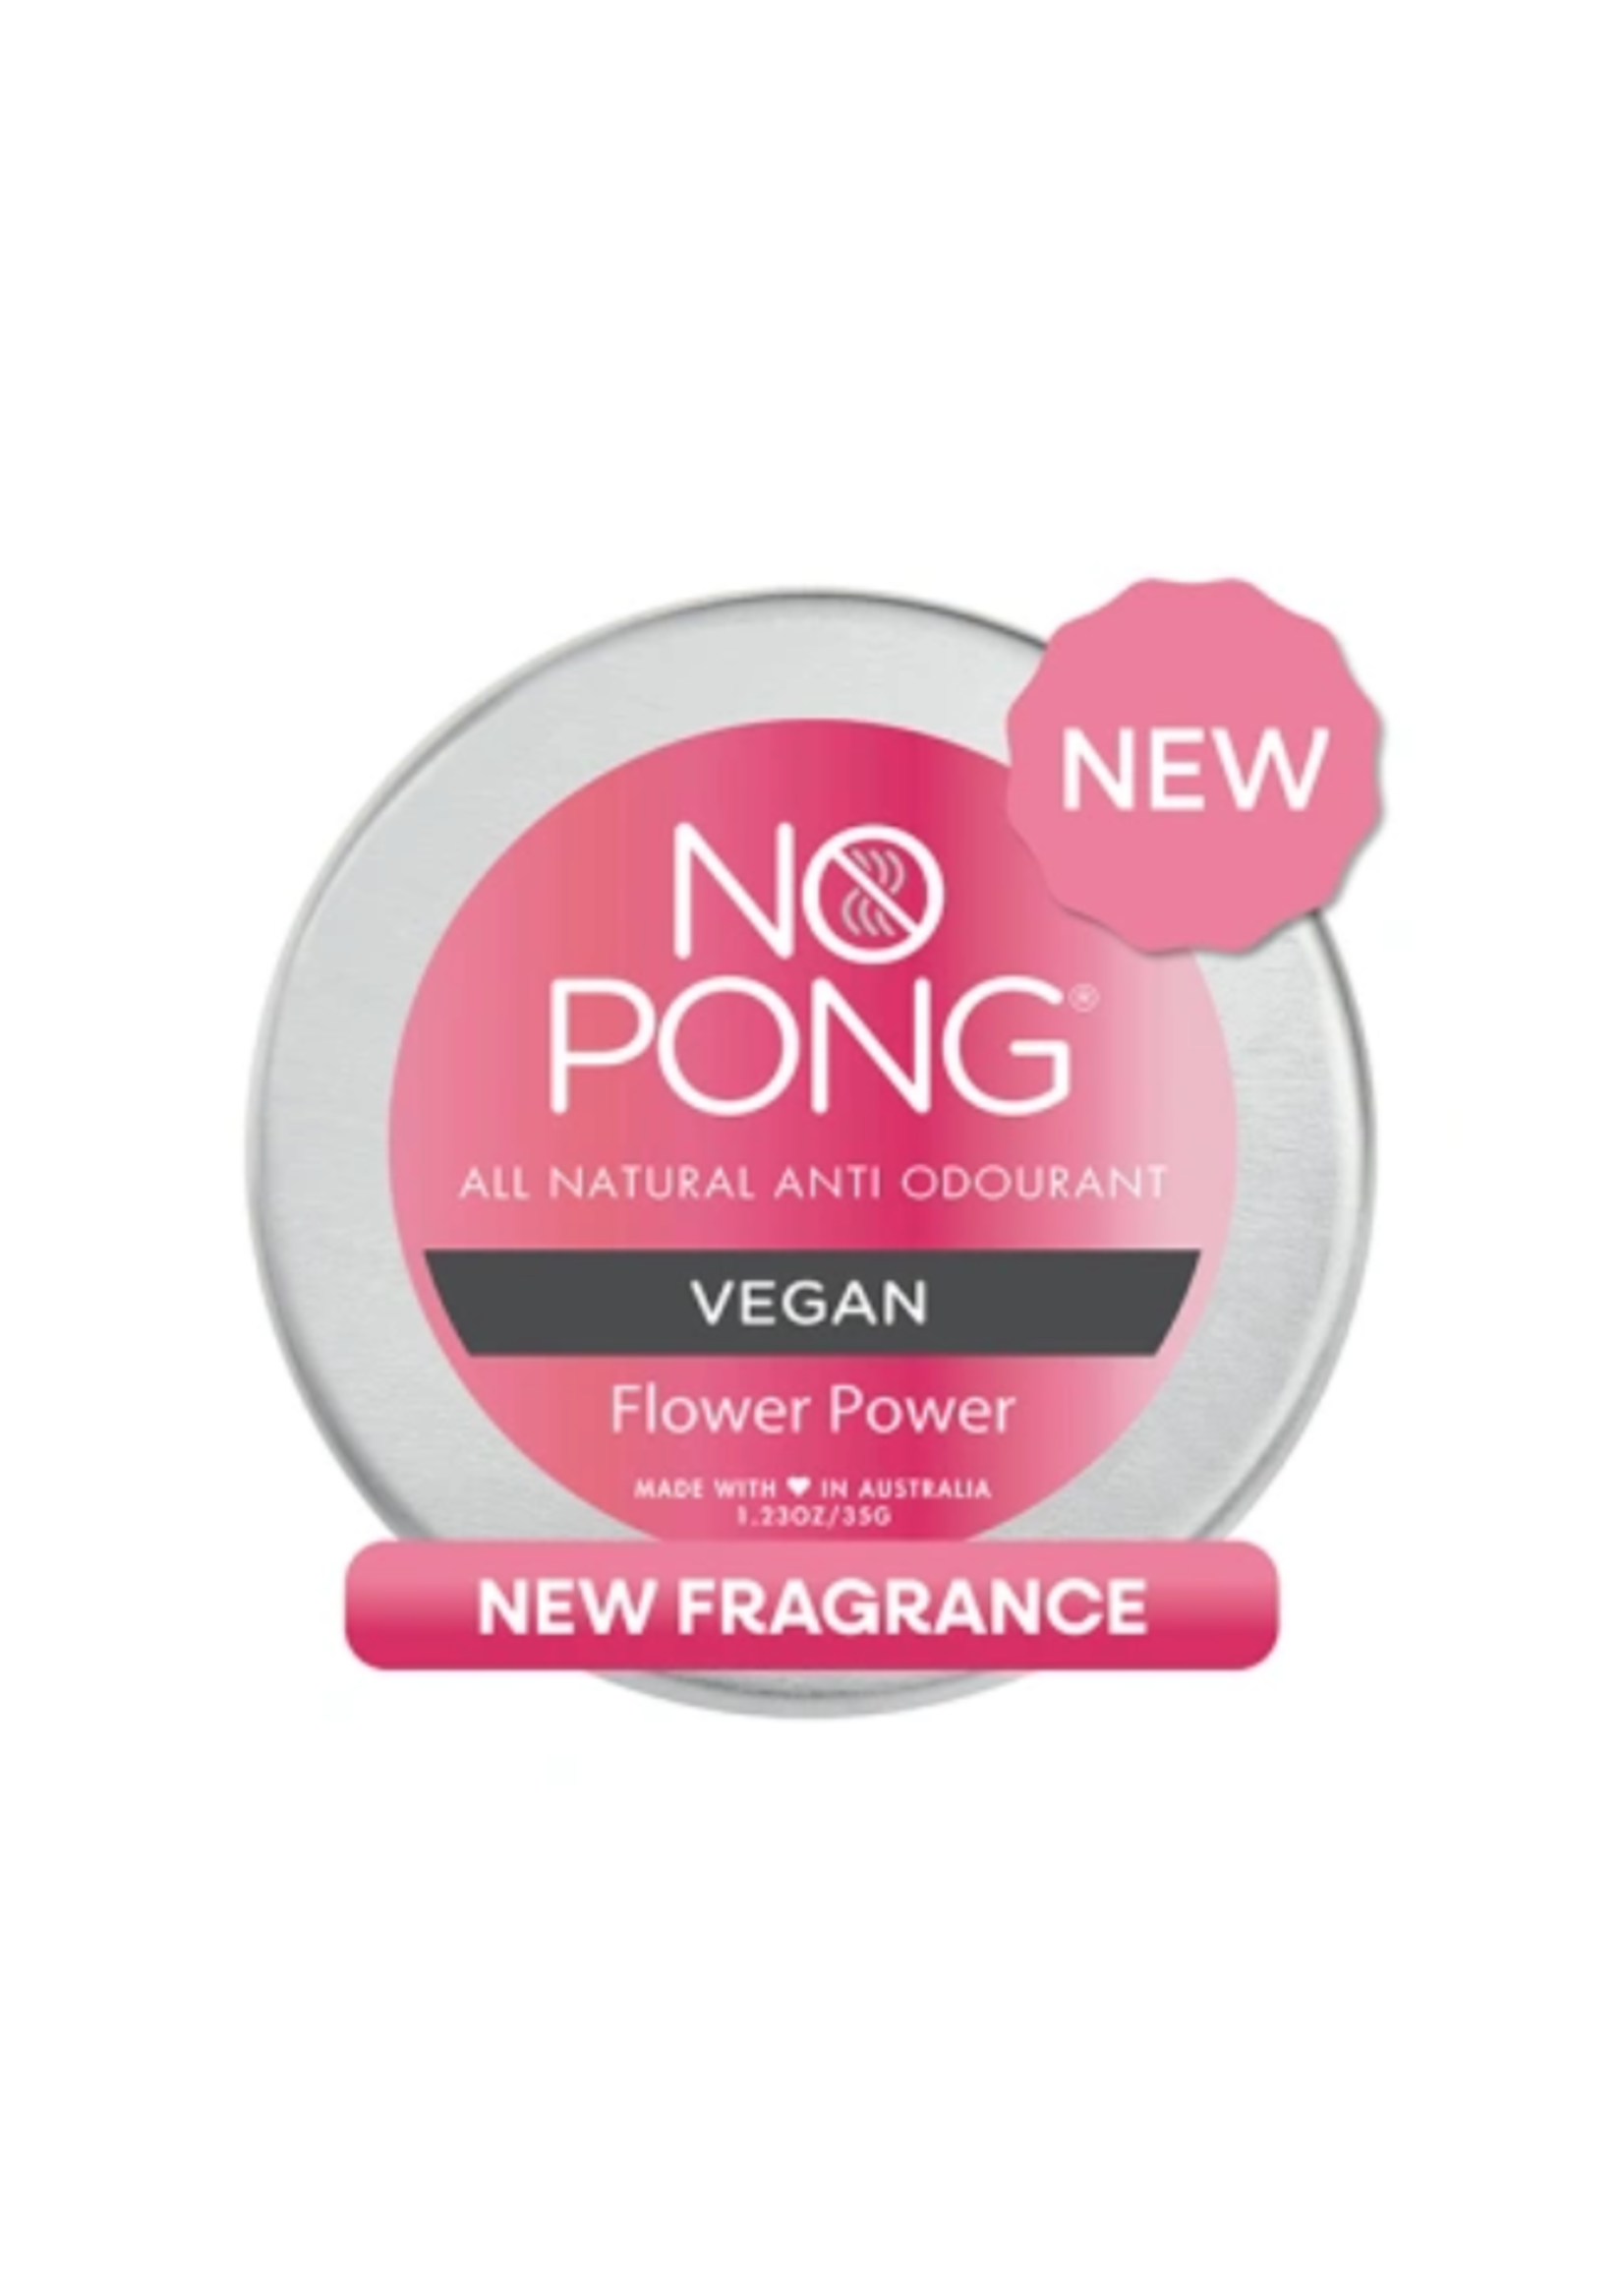 No Pong No Pong Flower Power Anti Odourant Vegan Low Bicarb